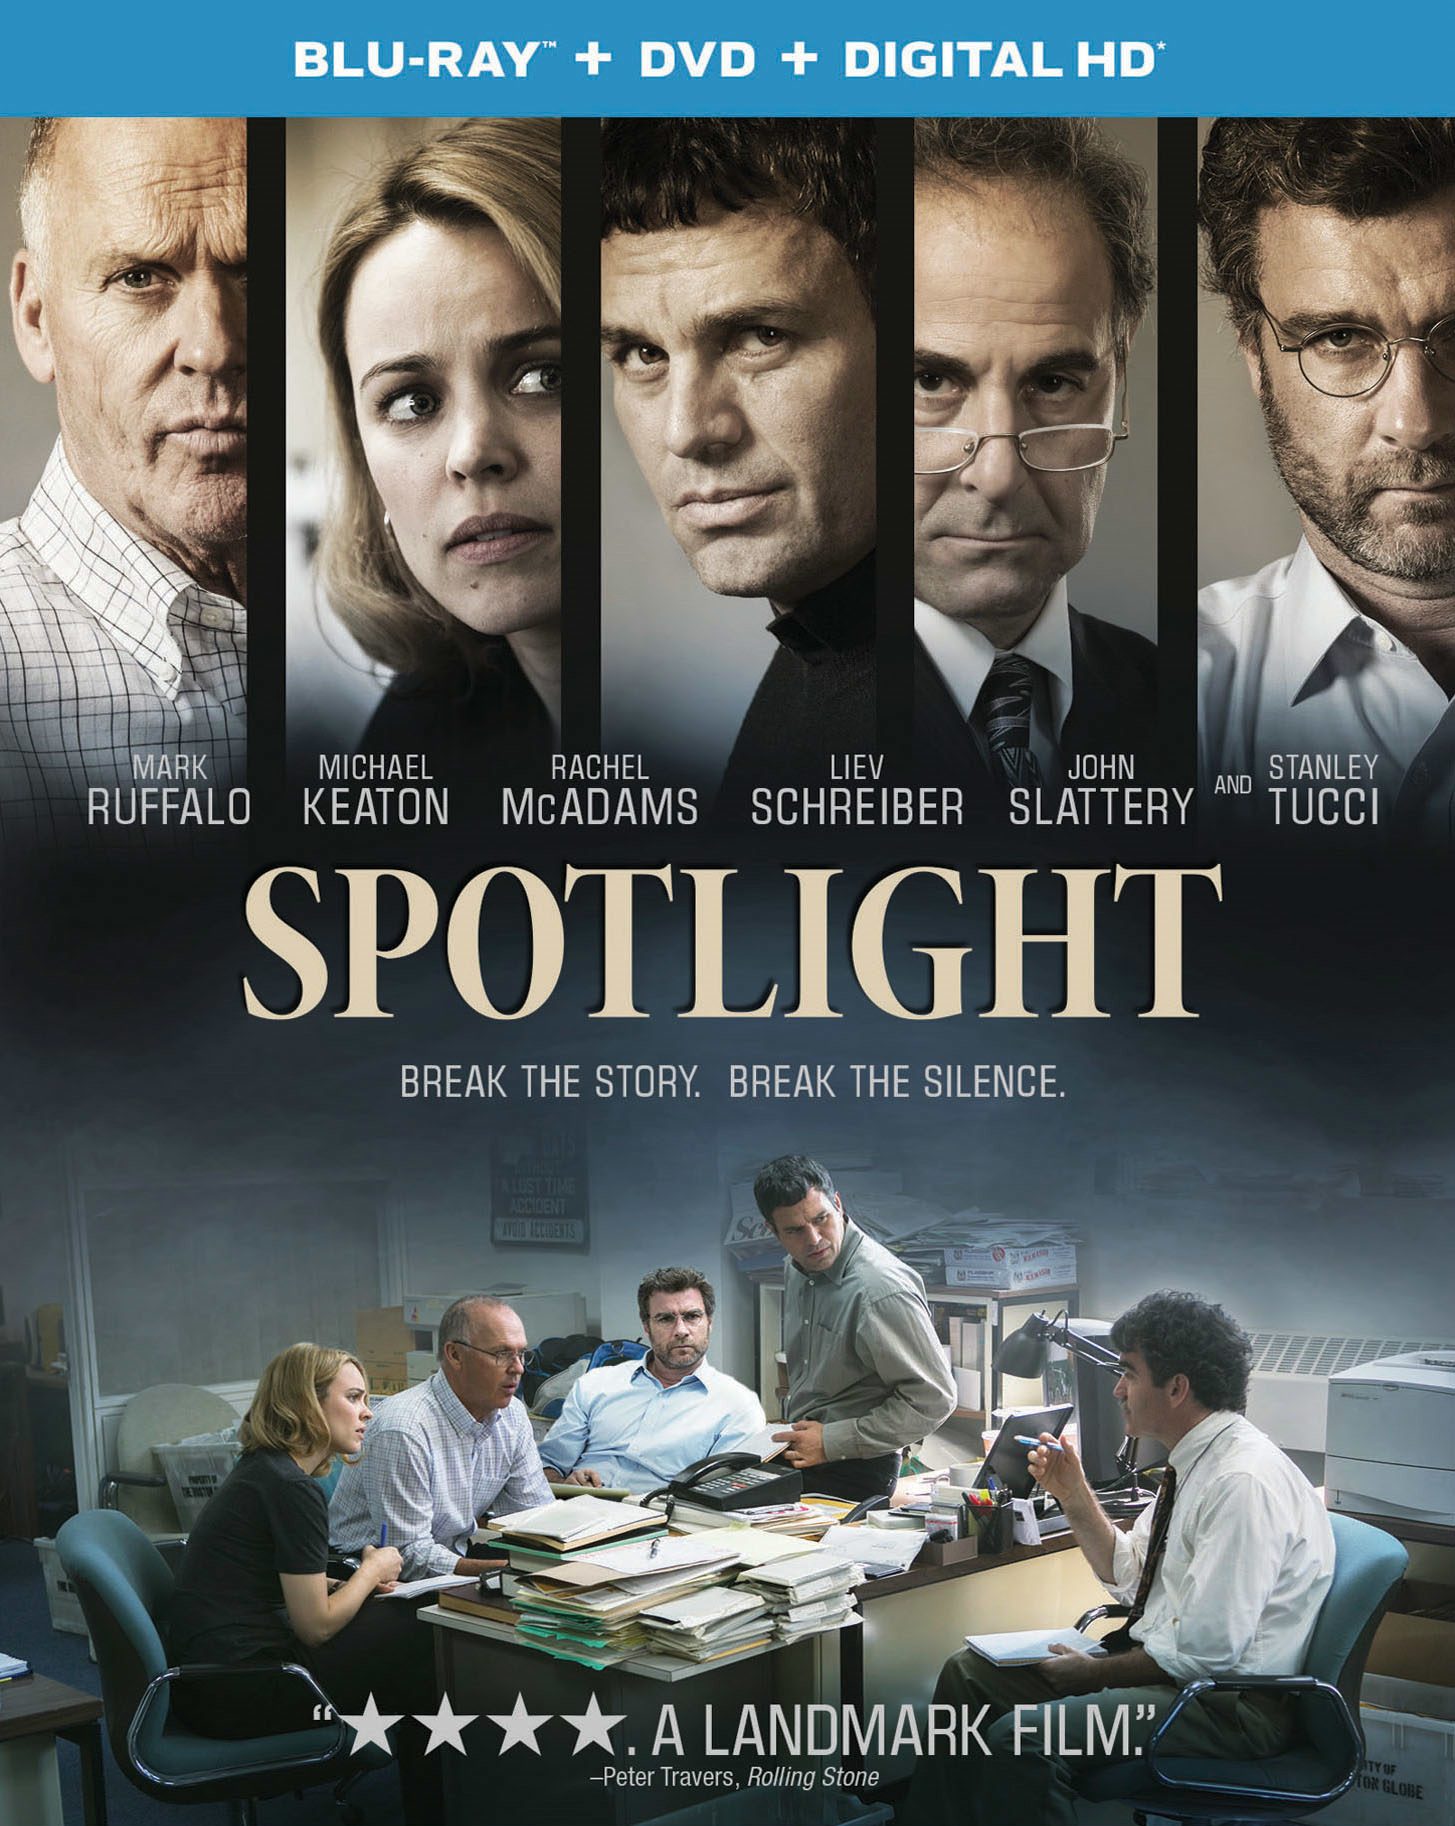 Spotlight (DVD + Digital) - Blu-ray [ 2015 ]  - Thriller Movies On Blu-ray - Movies On GRUV